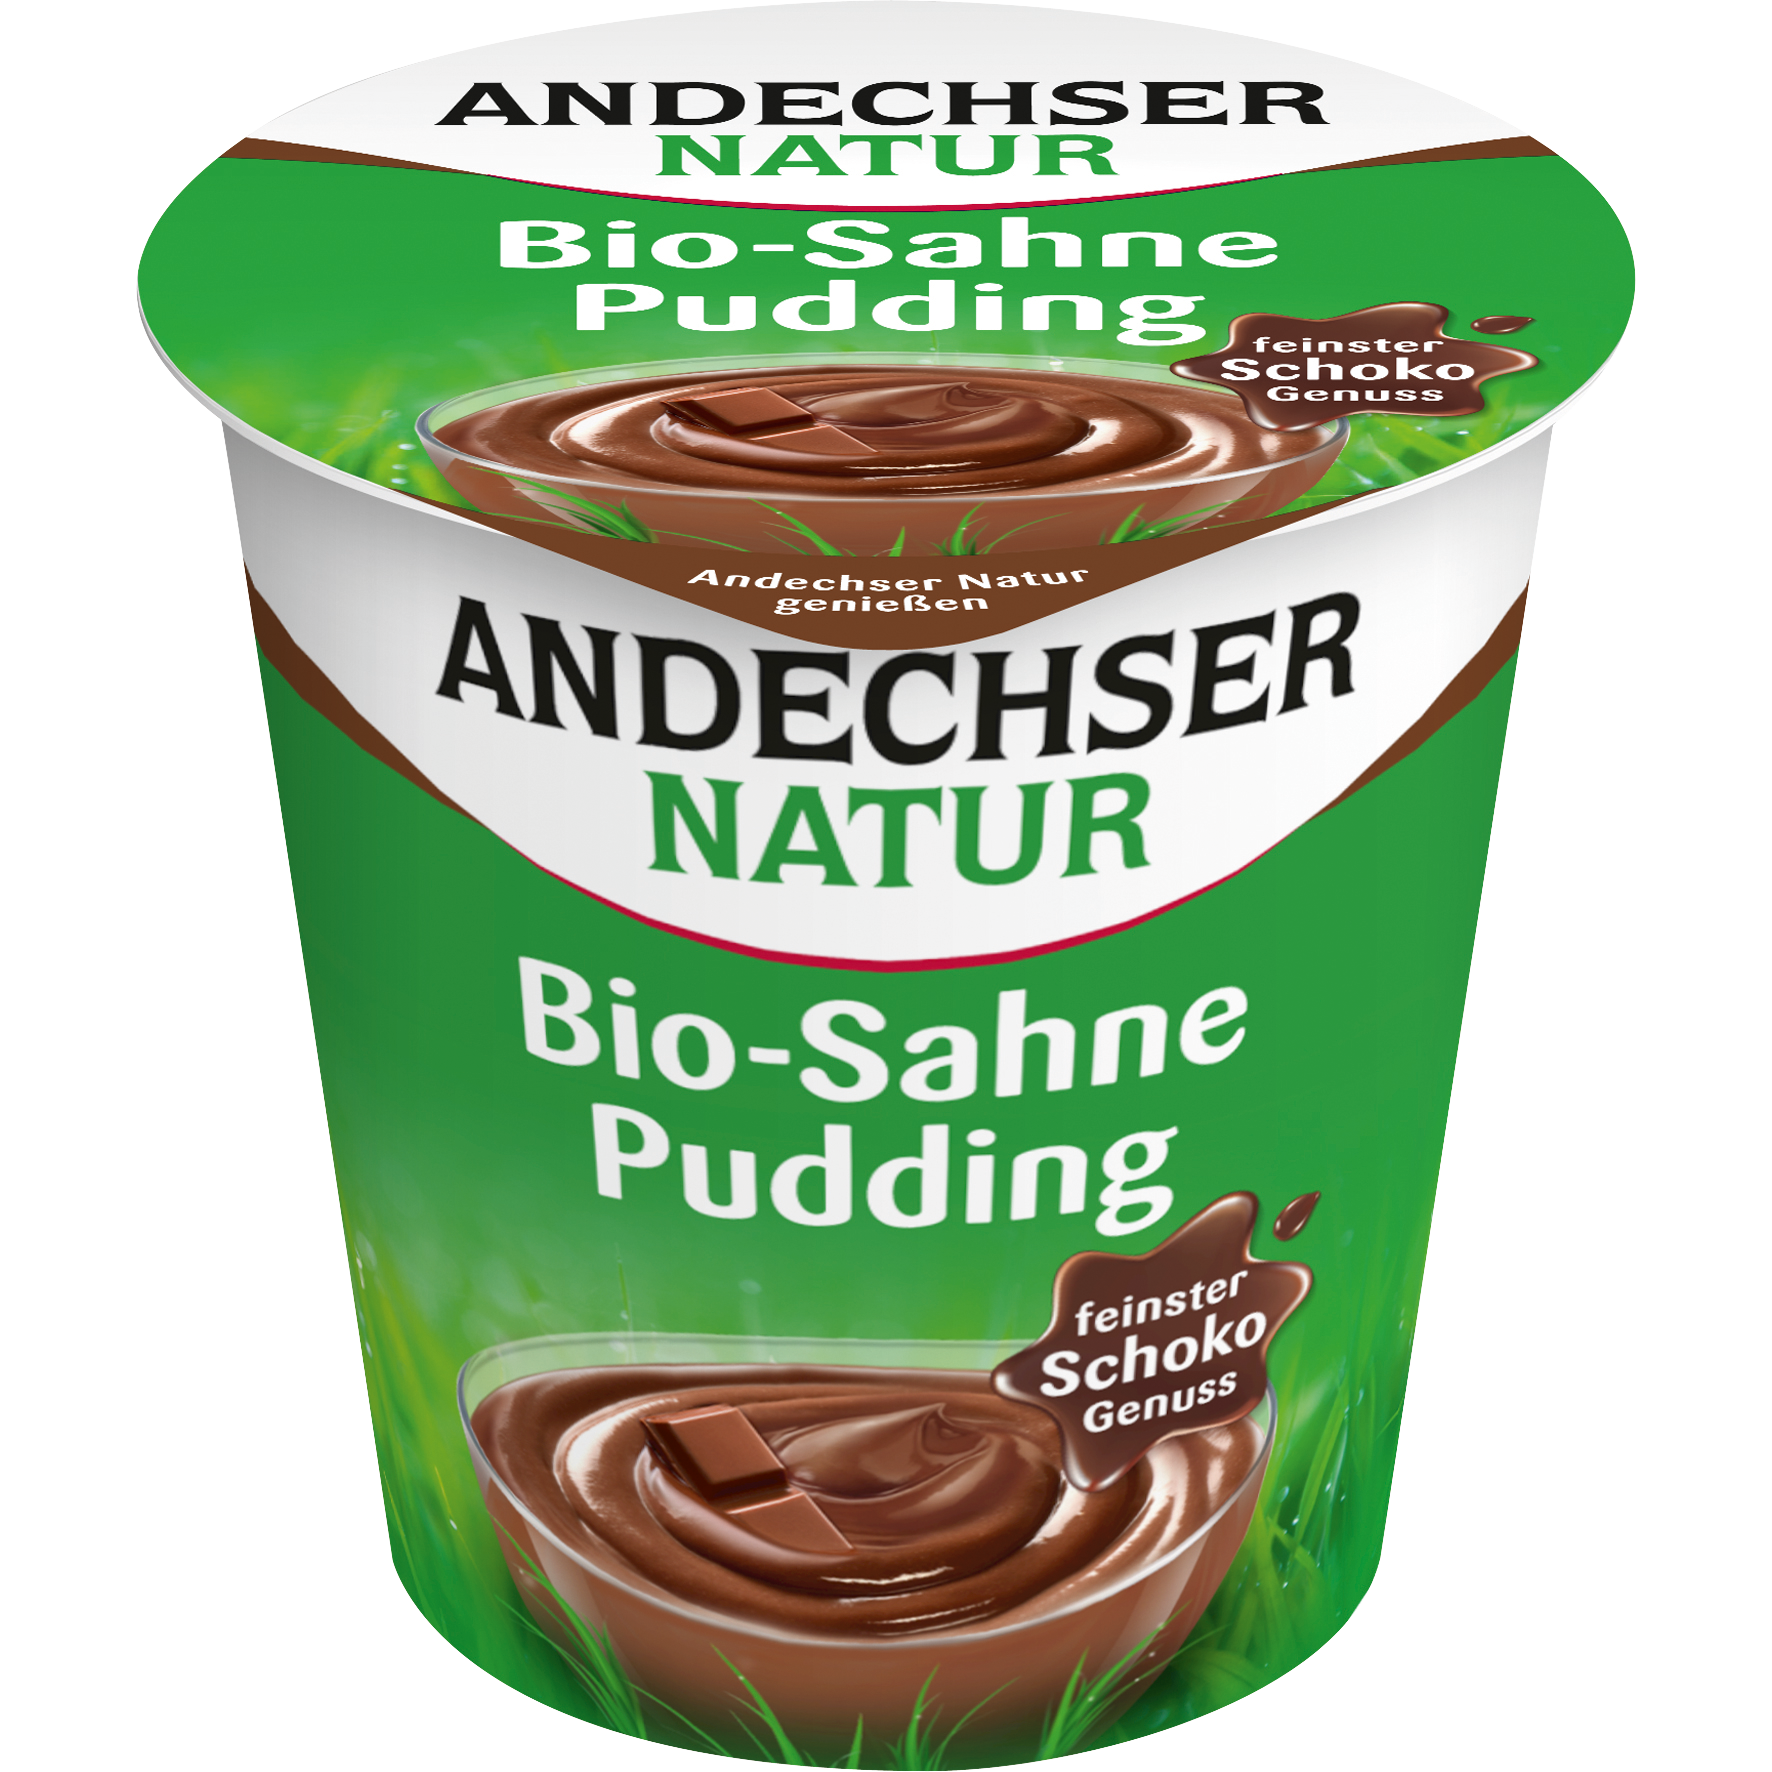 BIO Chocolate pudding 10%